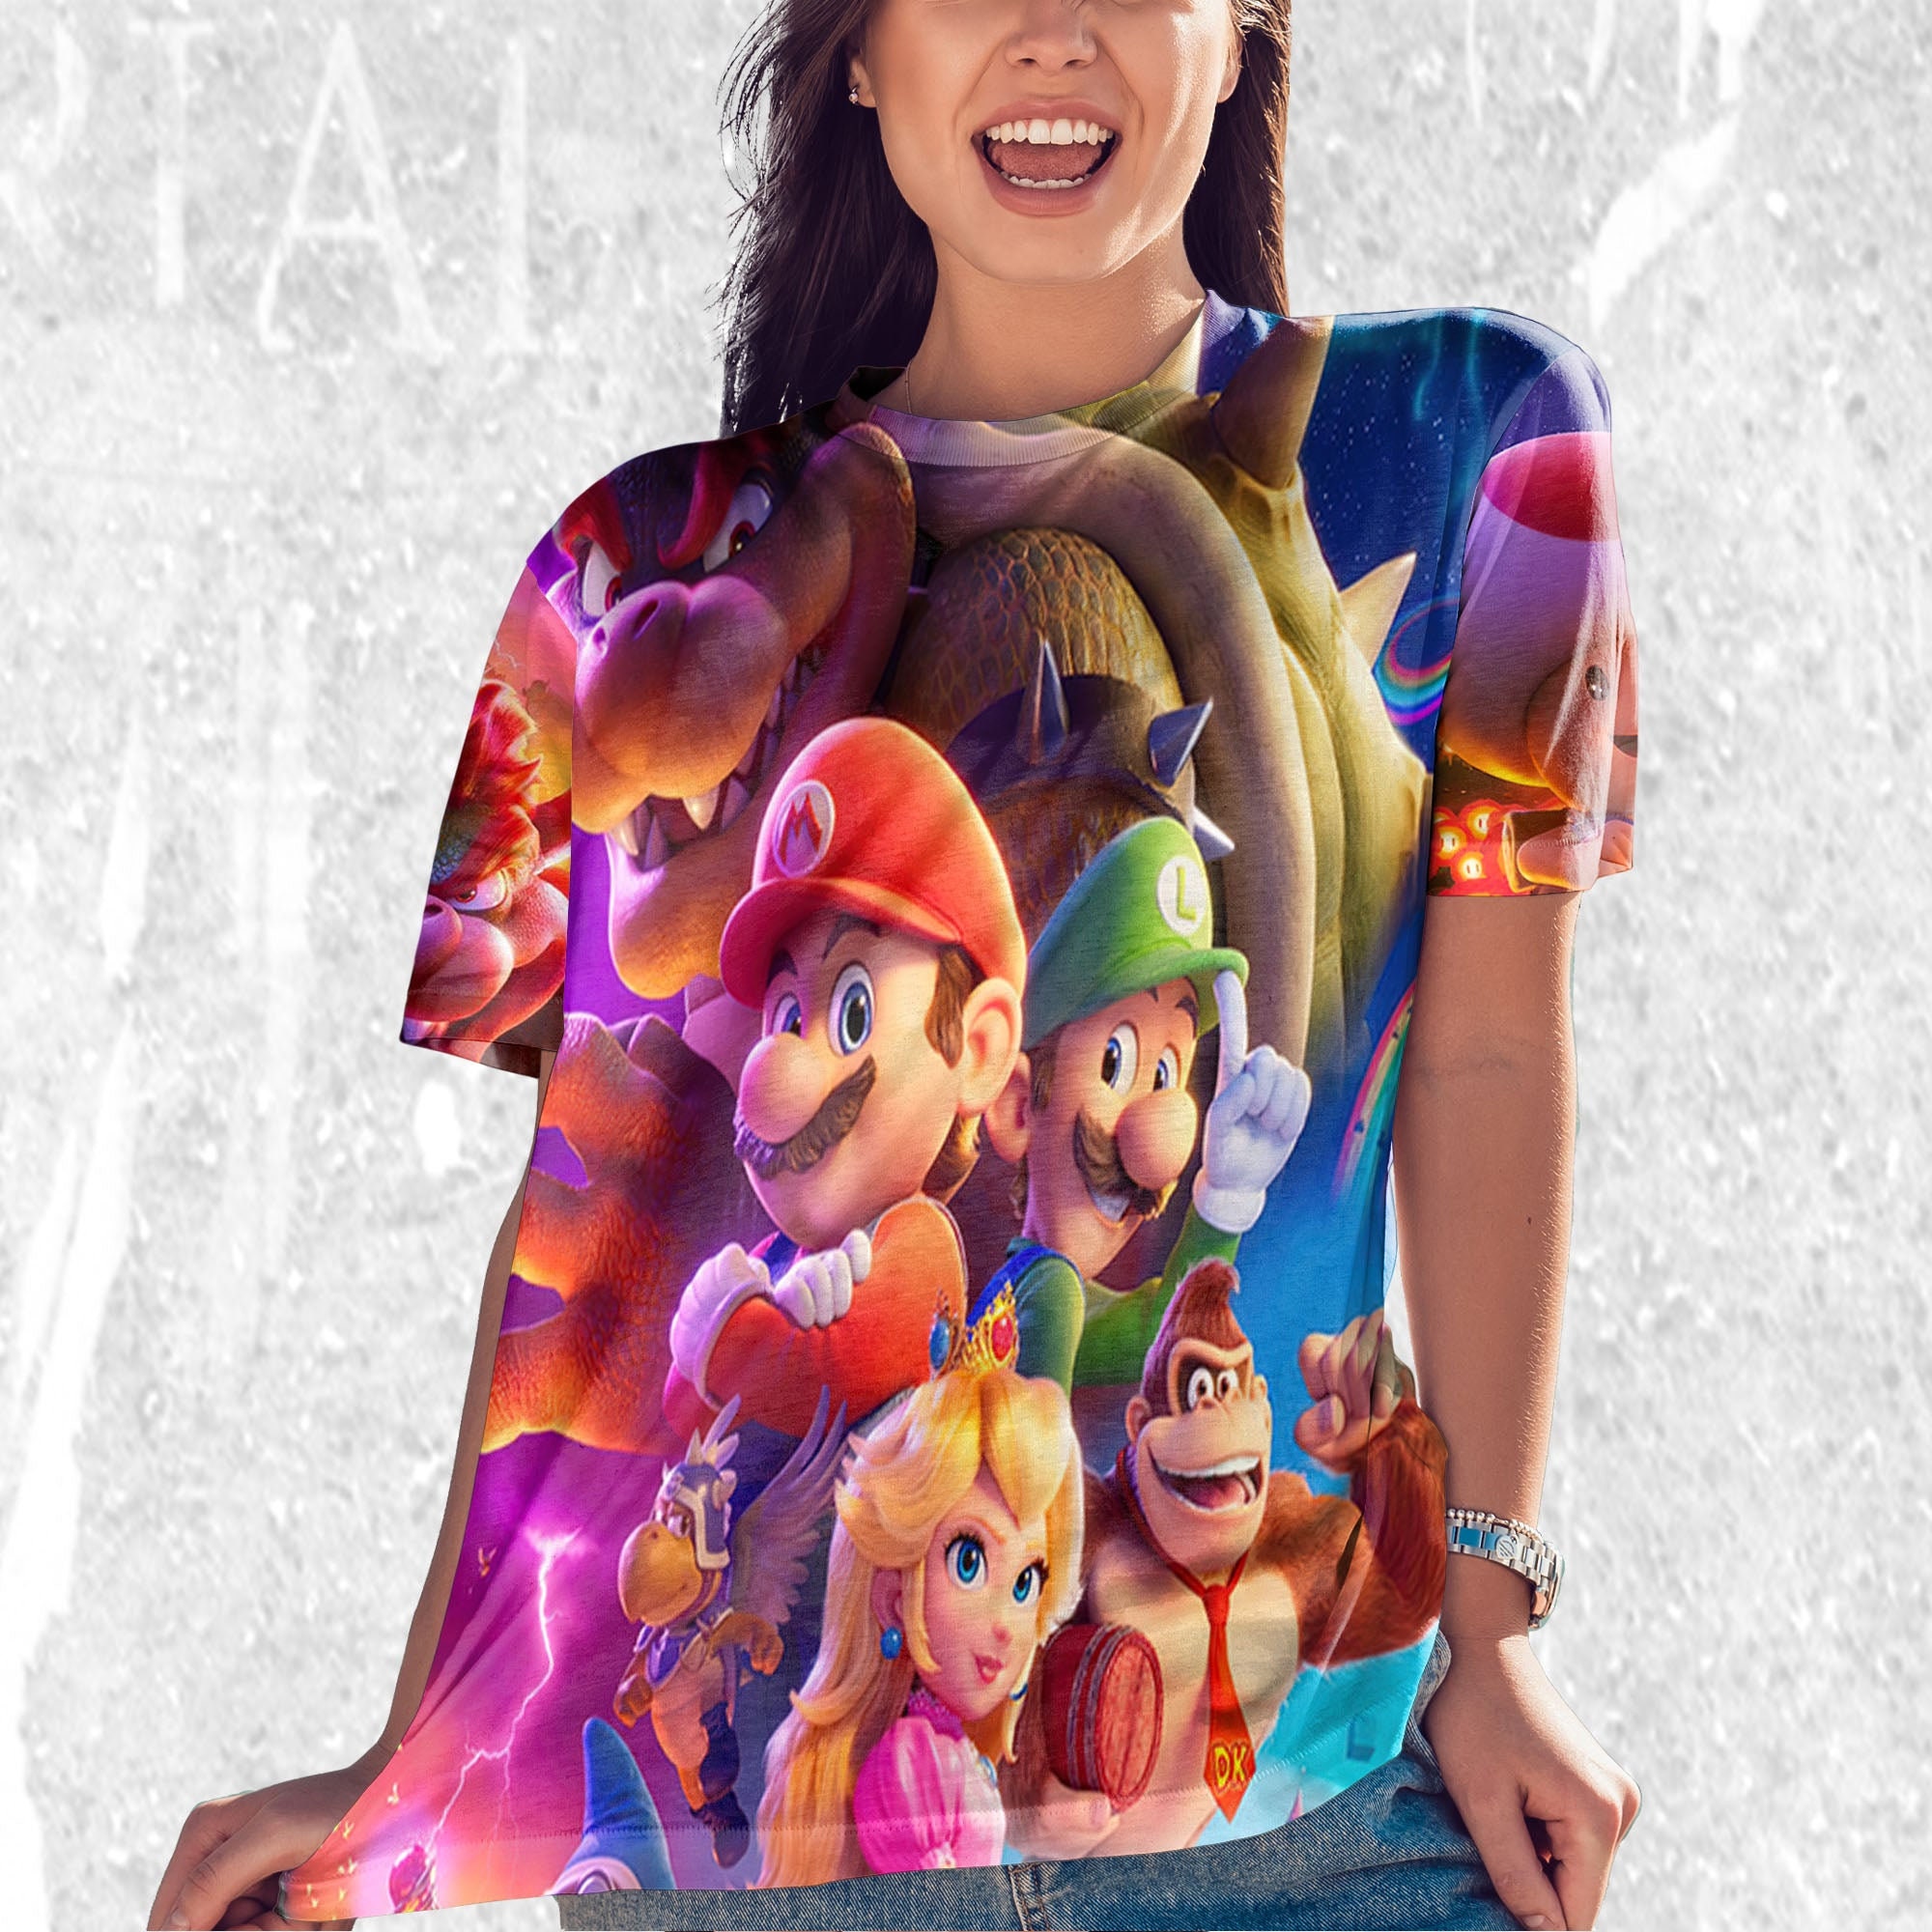 Mario Bros Character T-SHIRT, Mario Bros Birthday T-Shirt, Mario Cartoon 2023 Shirt